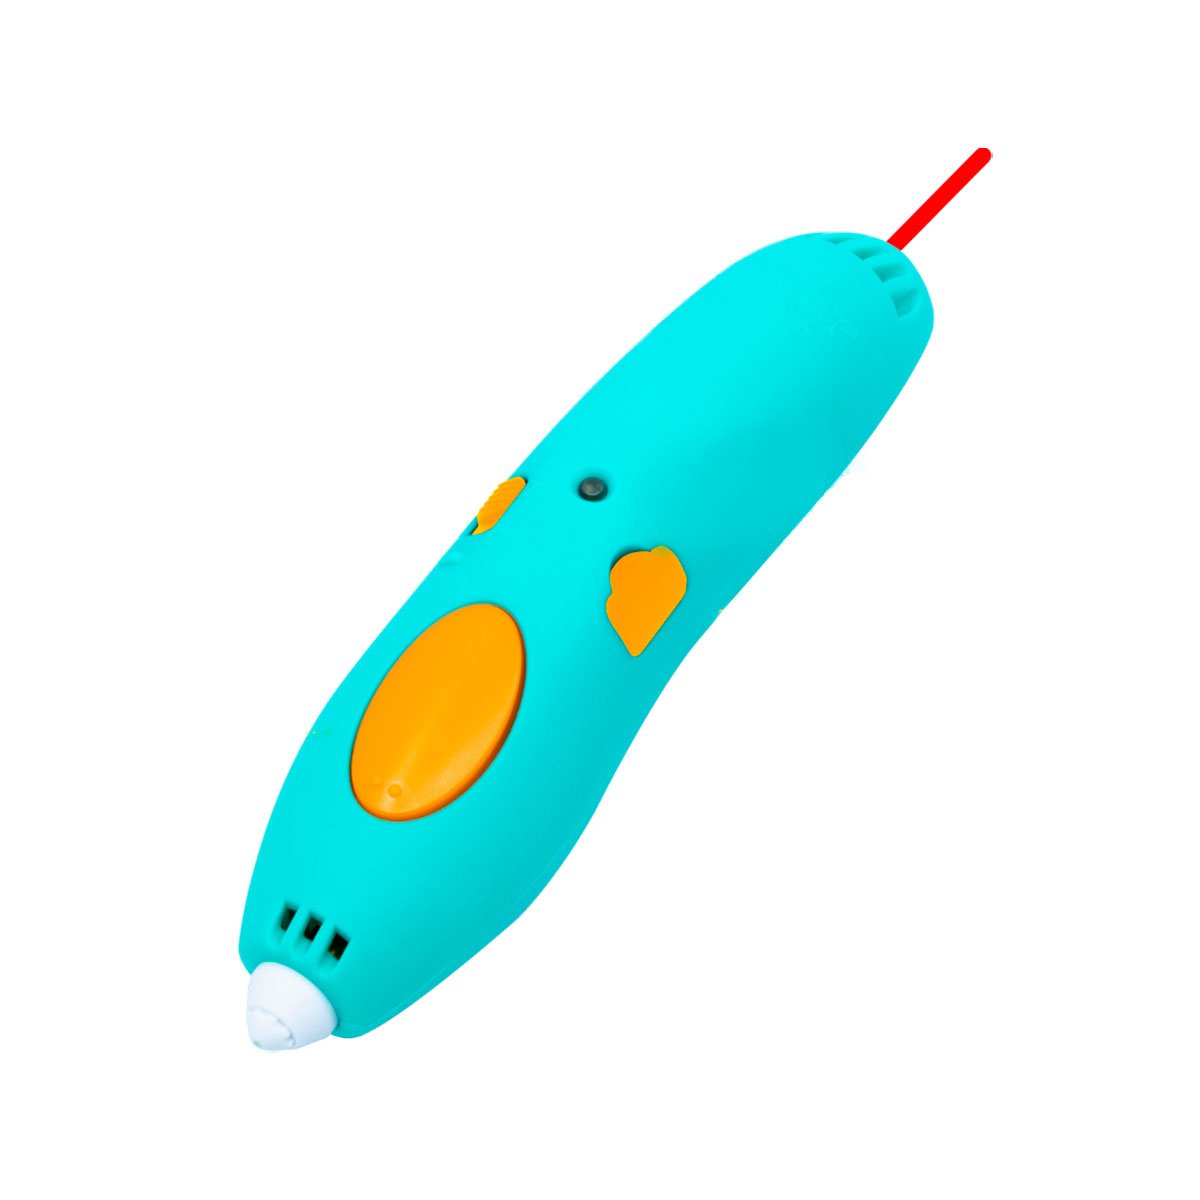 3D-ручка для детского творчества 3Doodler Start Plus Креатив Базовый набор, 72 стержня (SPLUS) - фото 2